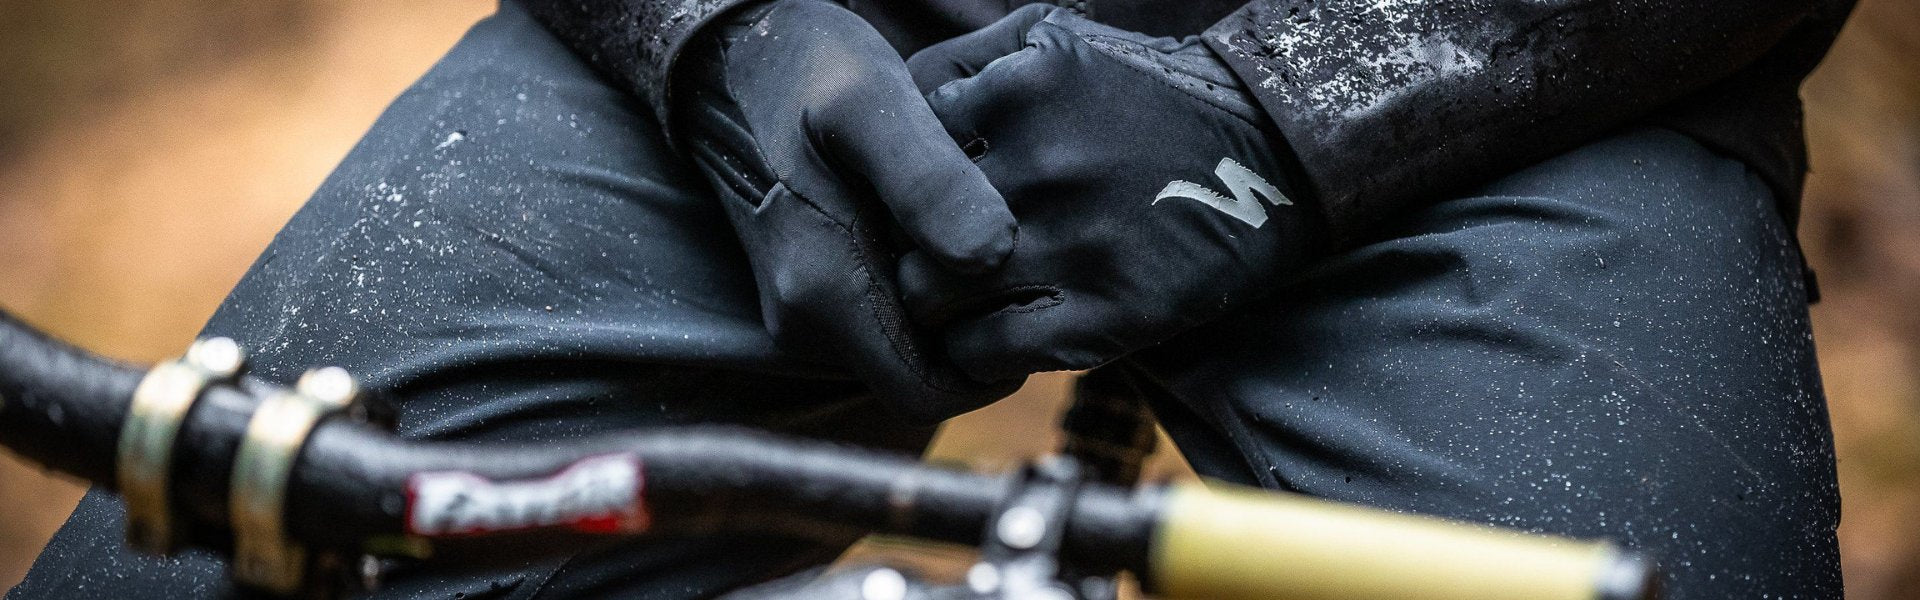 Shop the best bike gloves